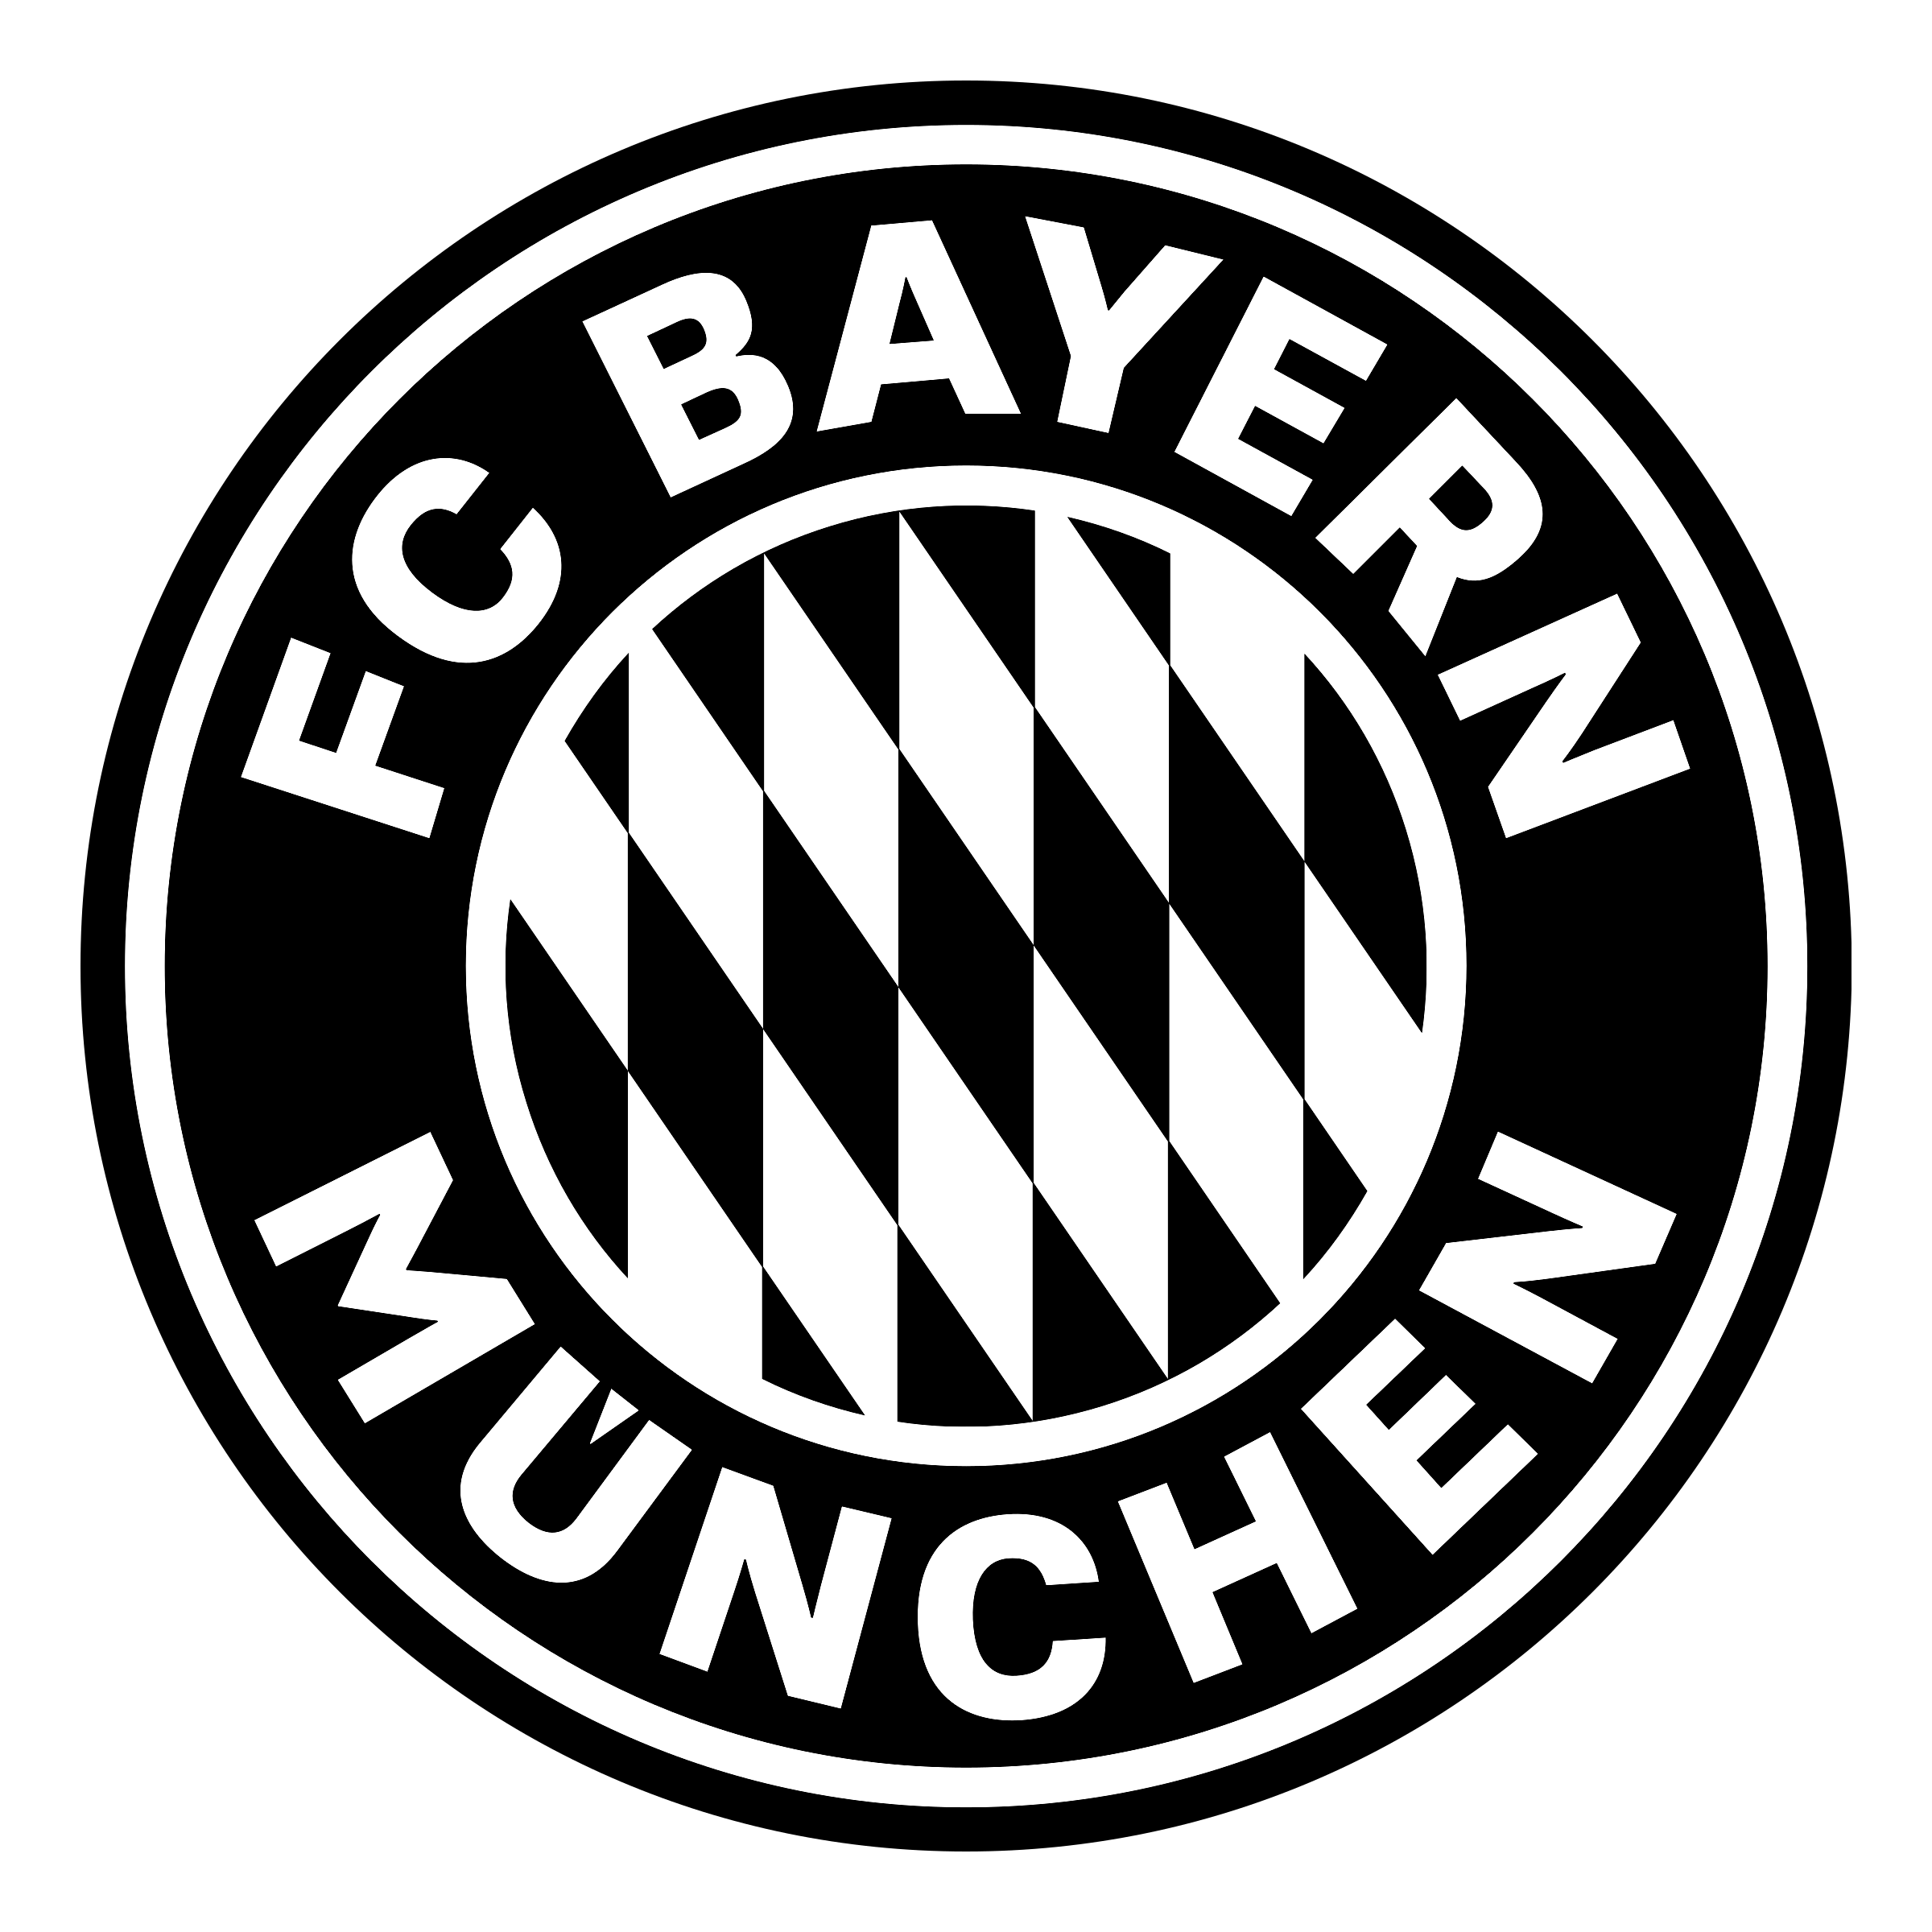 Bayern Munich Logo - Bayern Munich Logo PNG Transparent & SVG Vector - Freebie Supply